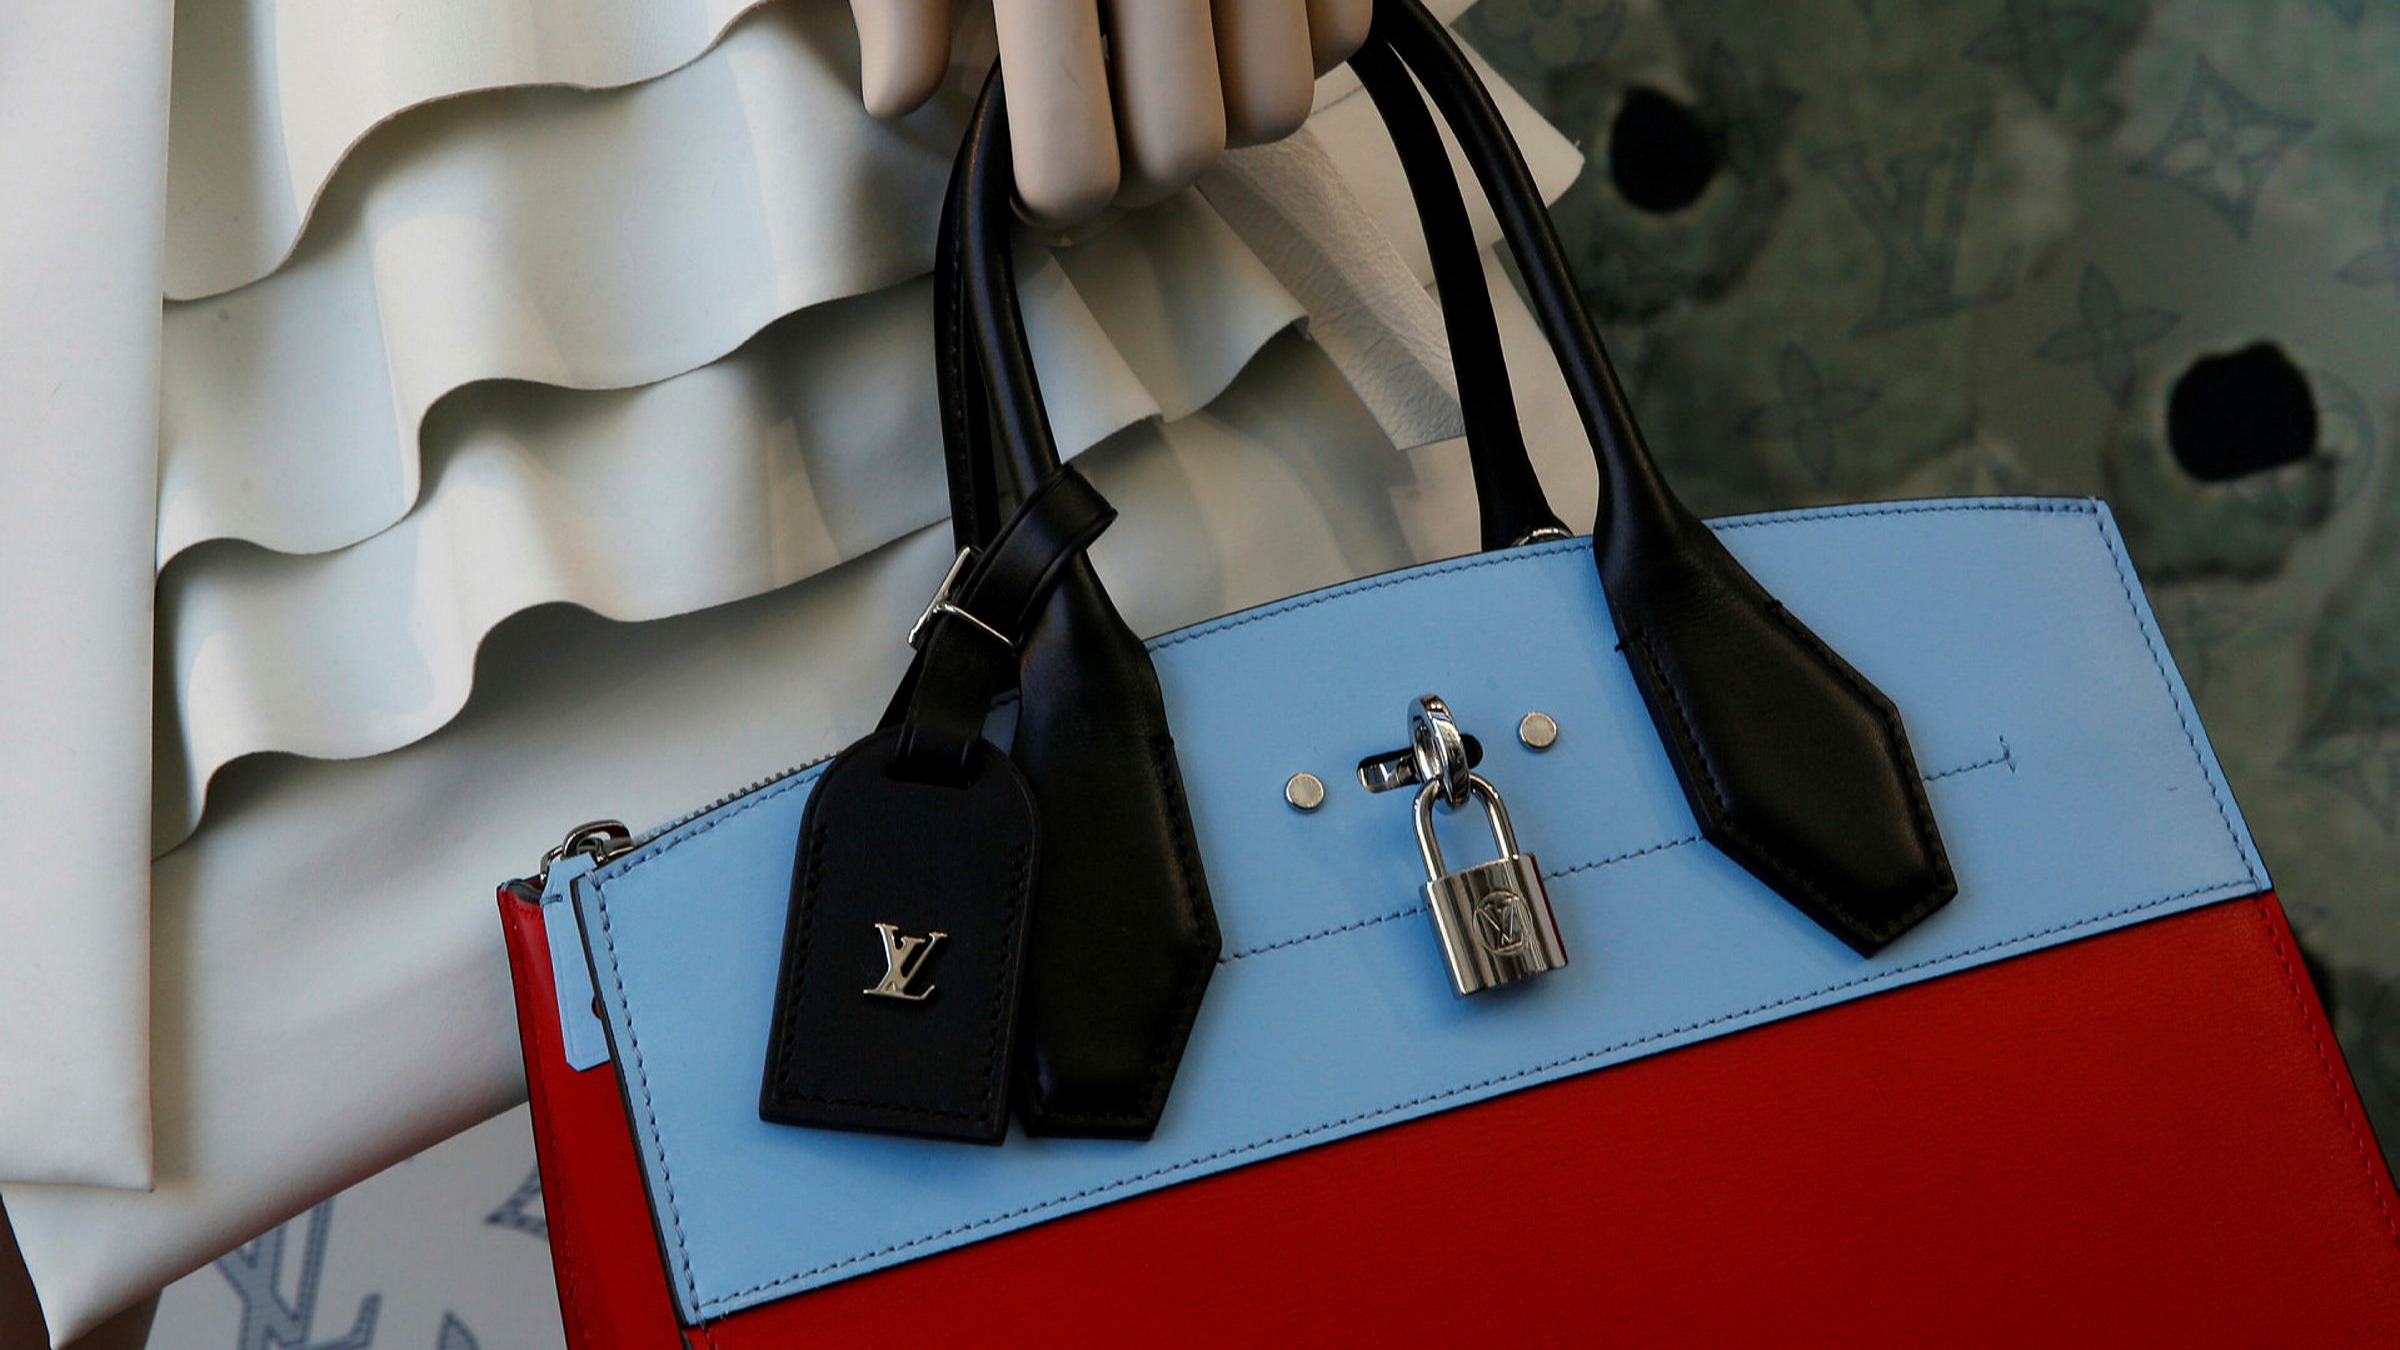 Chanel, Louis Vuitton 'can face tax probe' - The Korea Times